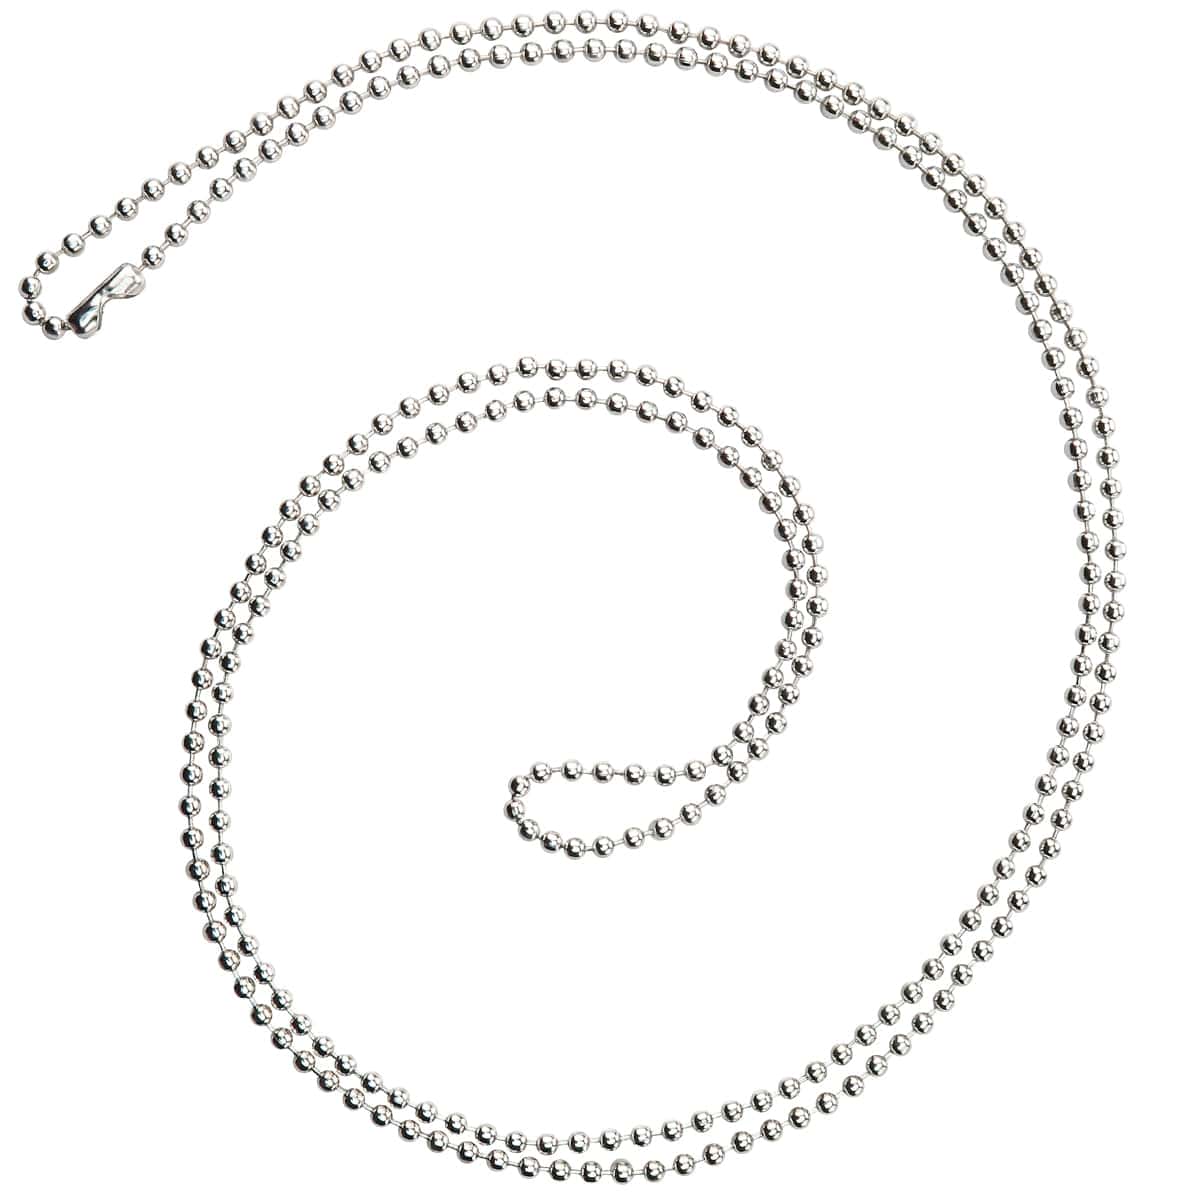 Nickel-Plated Steel Beaded Neck Chain, Length 36" (914Mm)  (P/N 2125-2000) 2125-2000